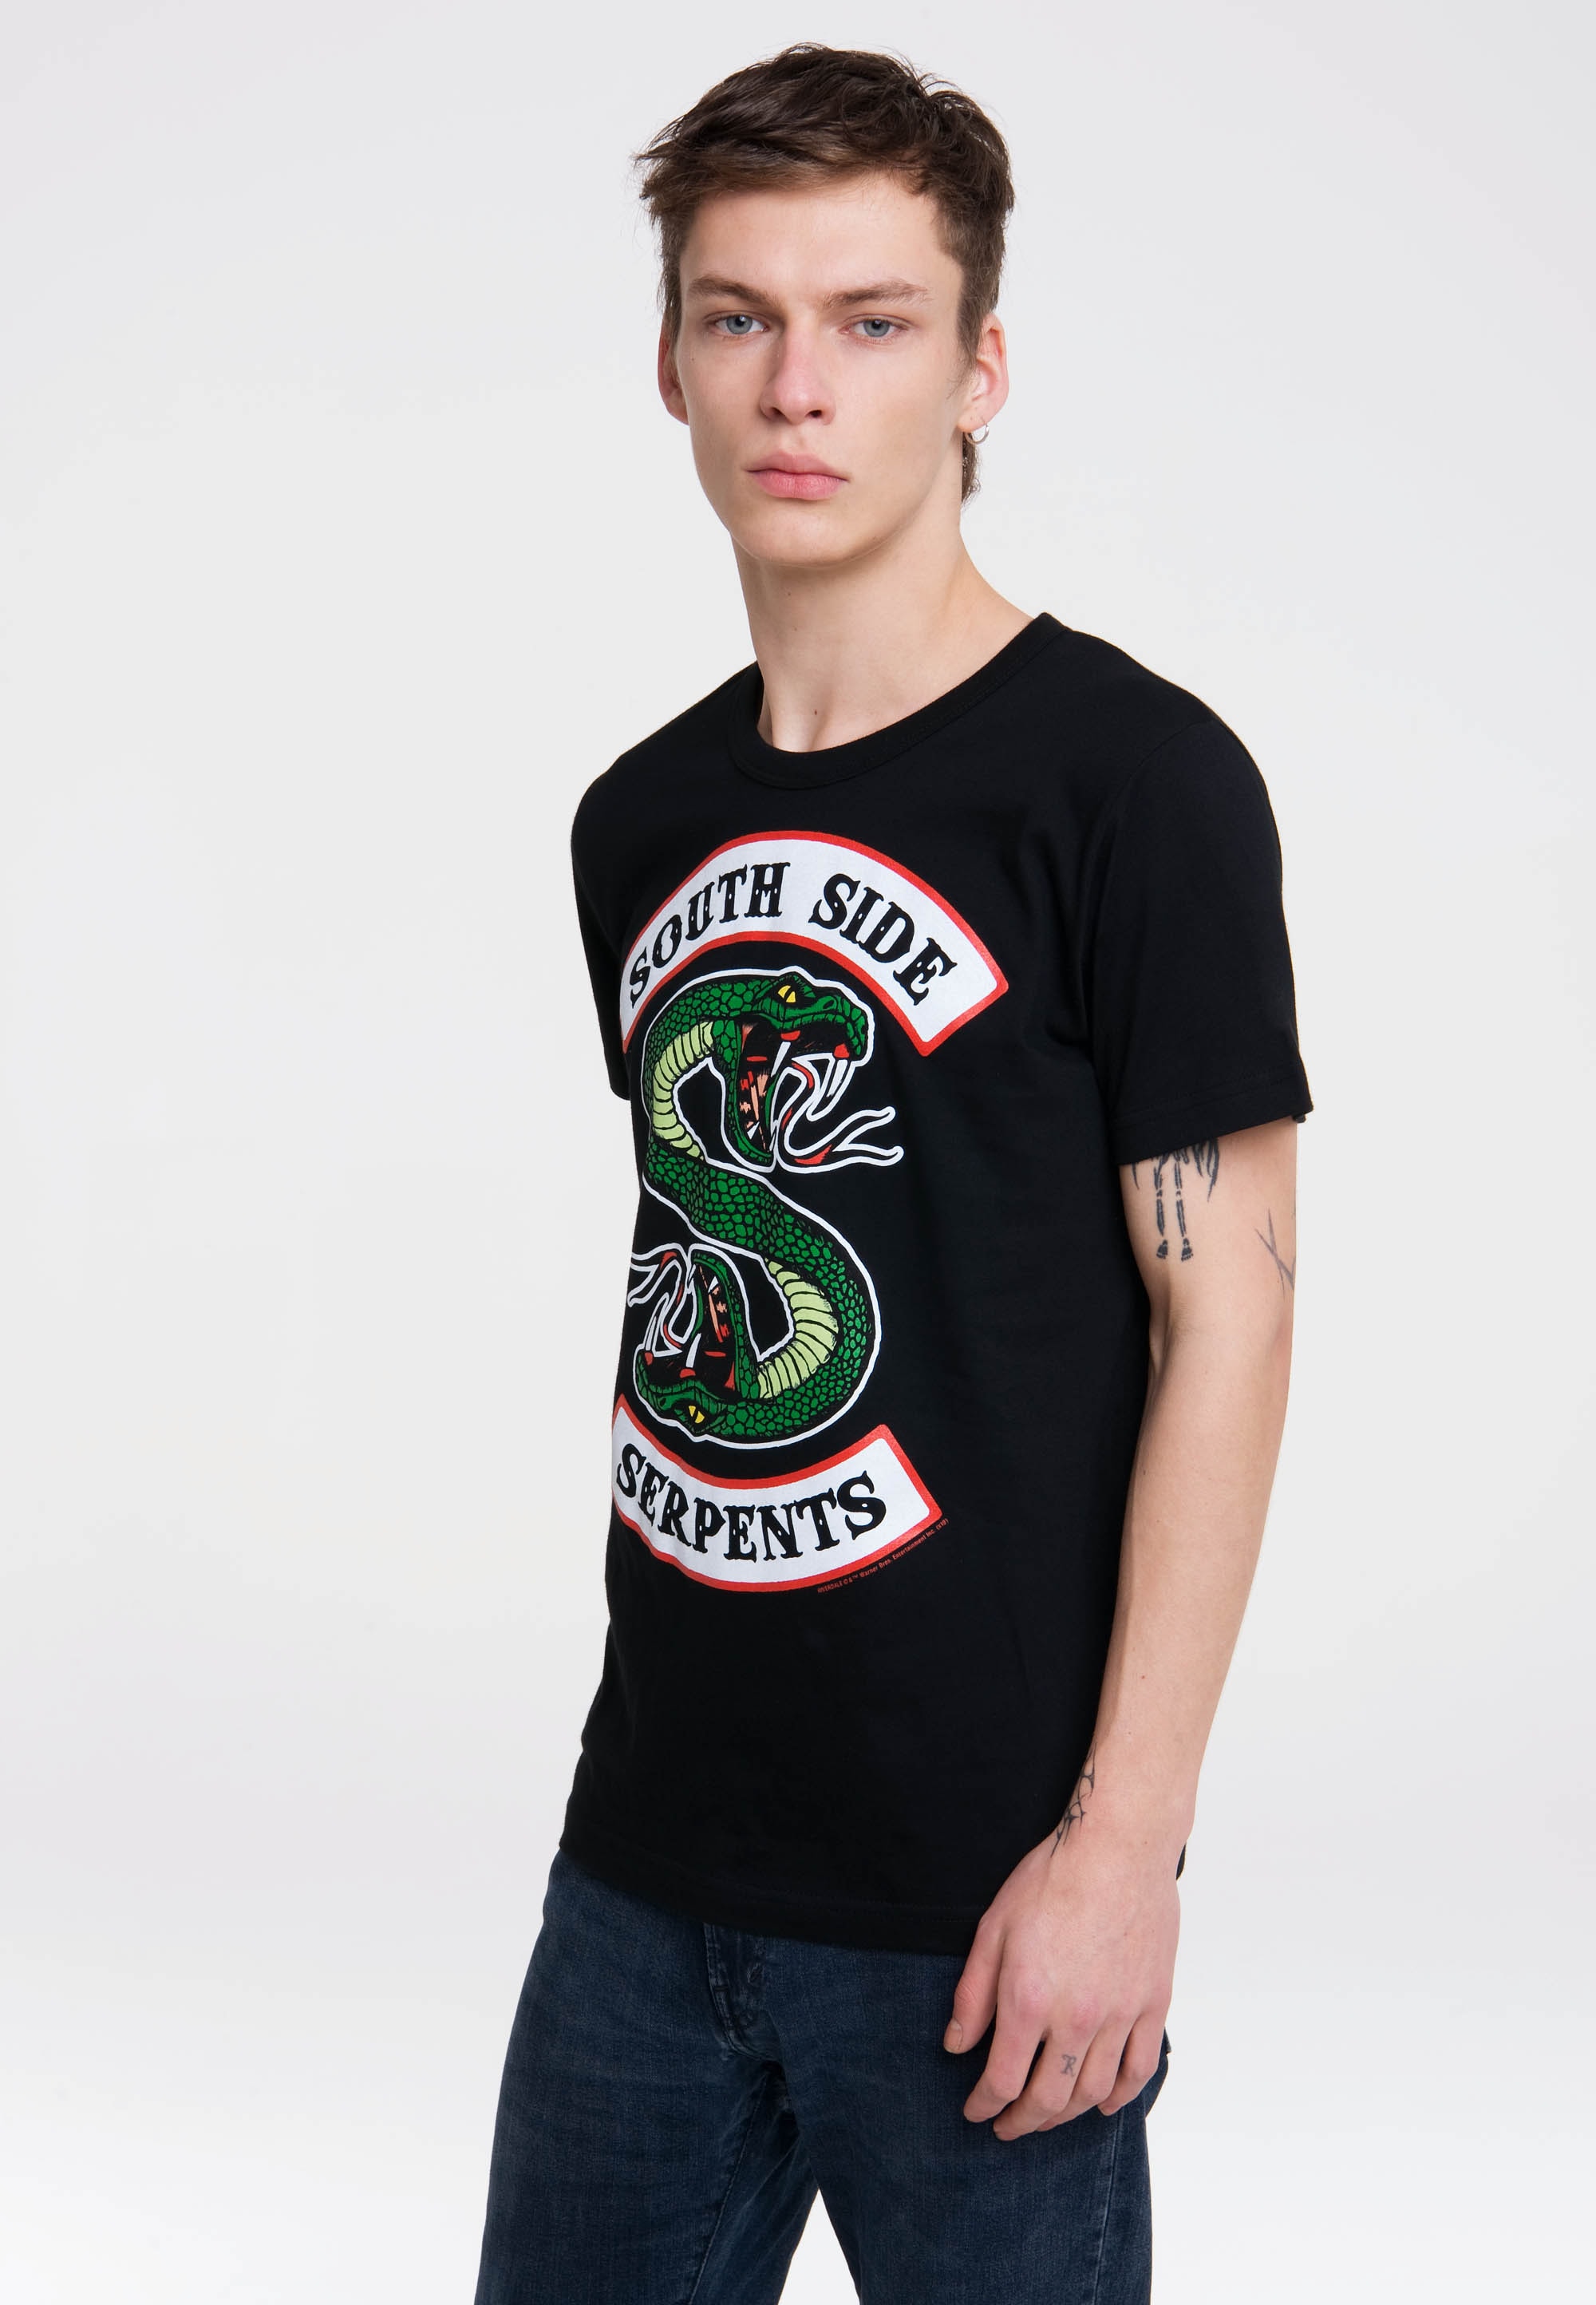 LOGOSHIRT T-Shirt »Riverdale - South Side Serpents«, mit South Side Serpents-Motiv